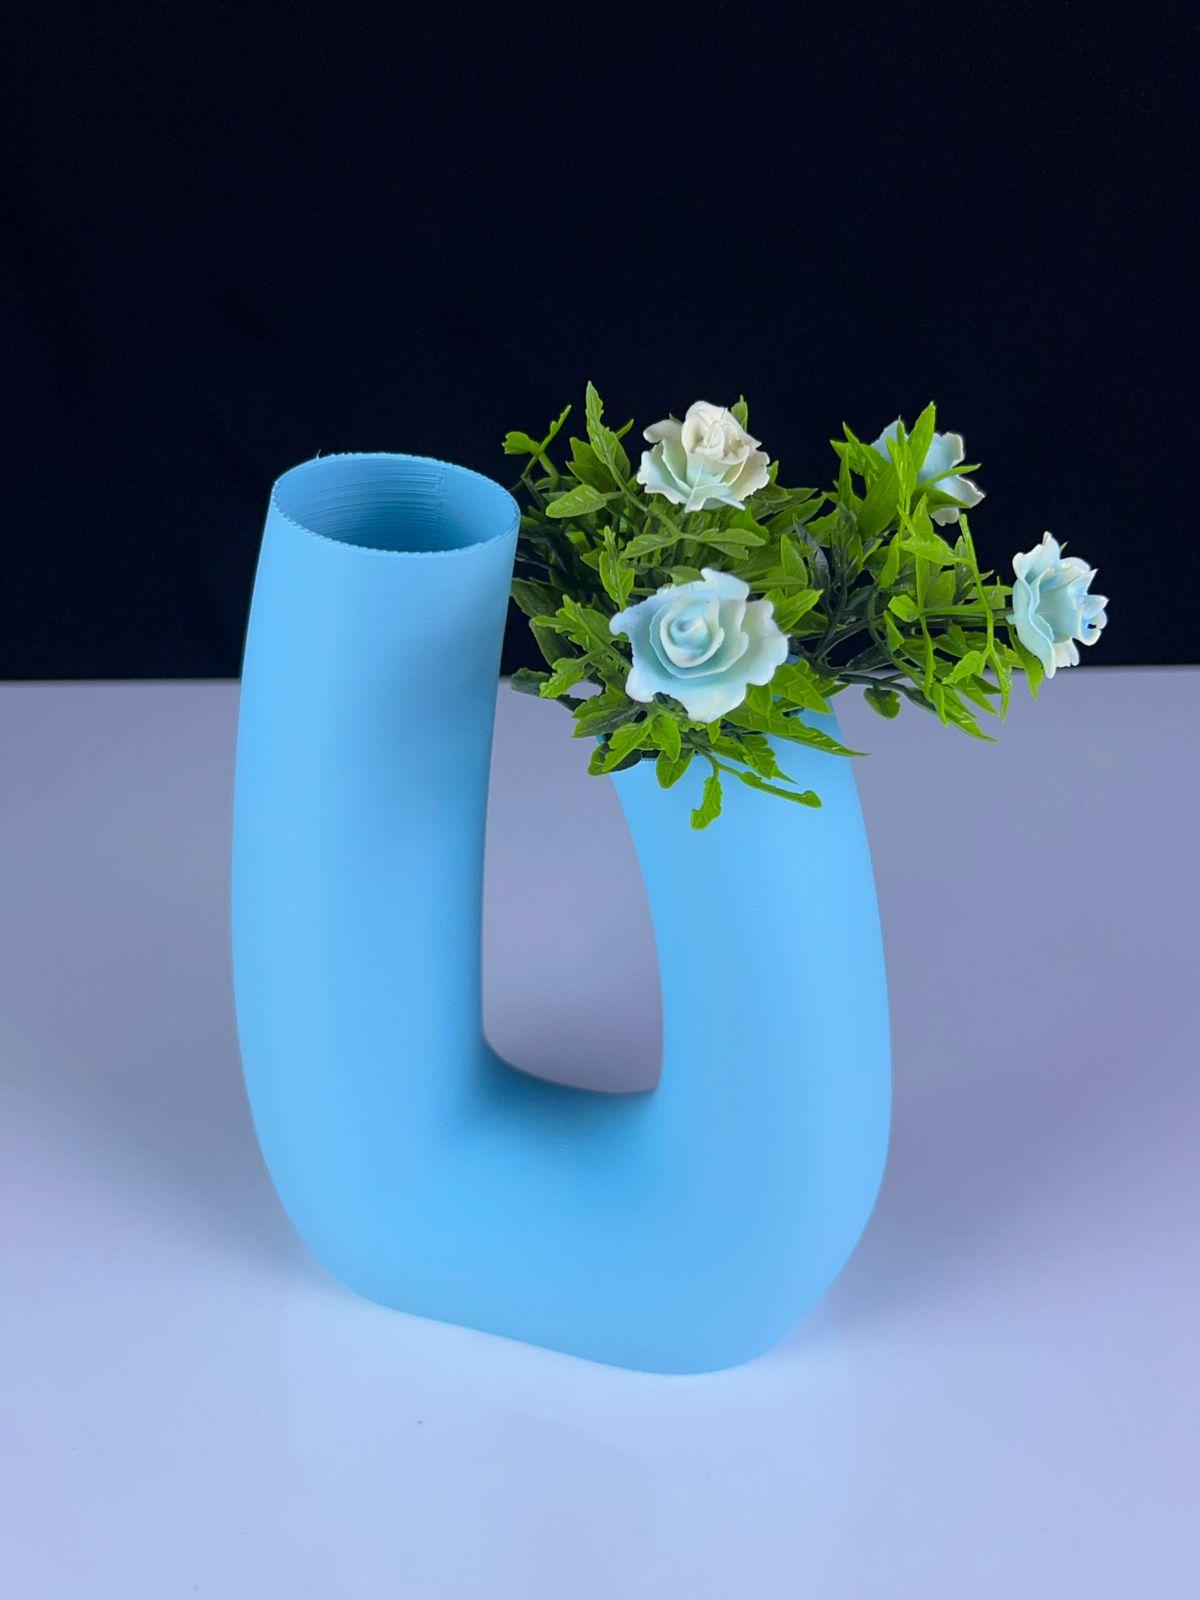 Minimal vase 3d model